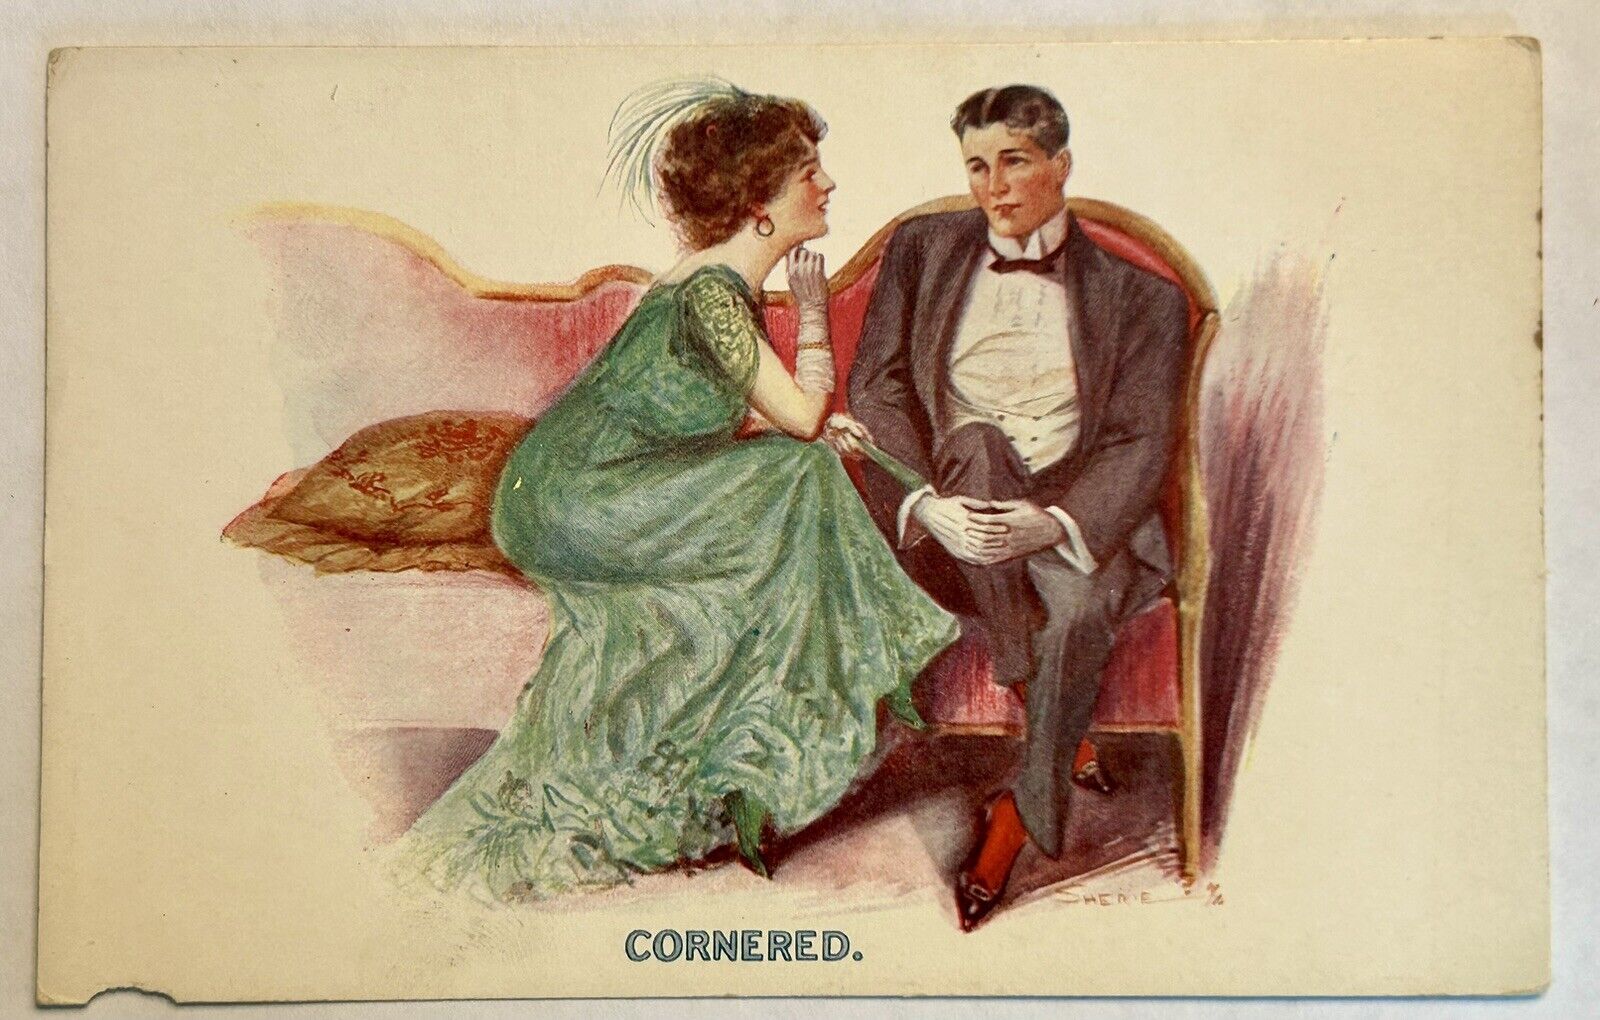 Woman Corners Man. Vintage love and romance postcard early 1900s.